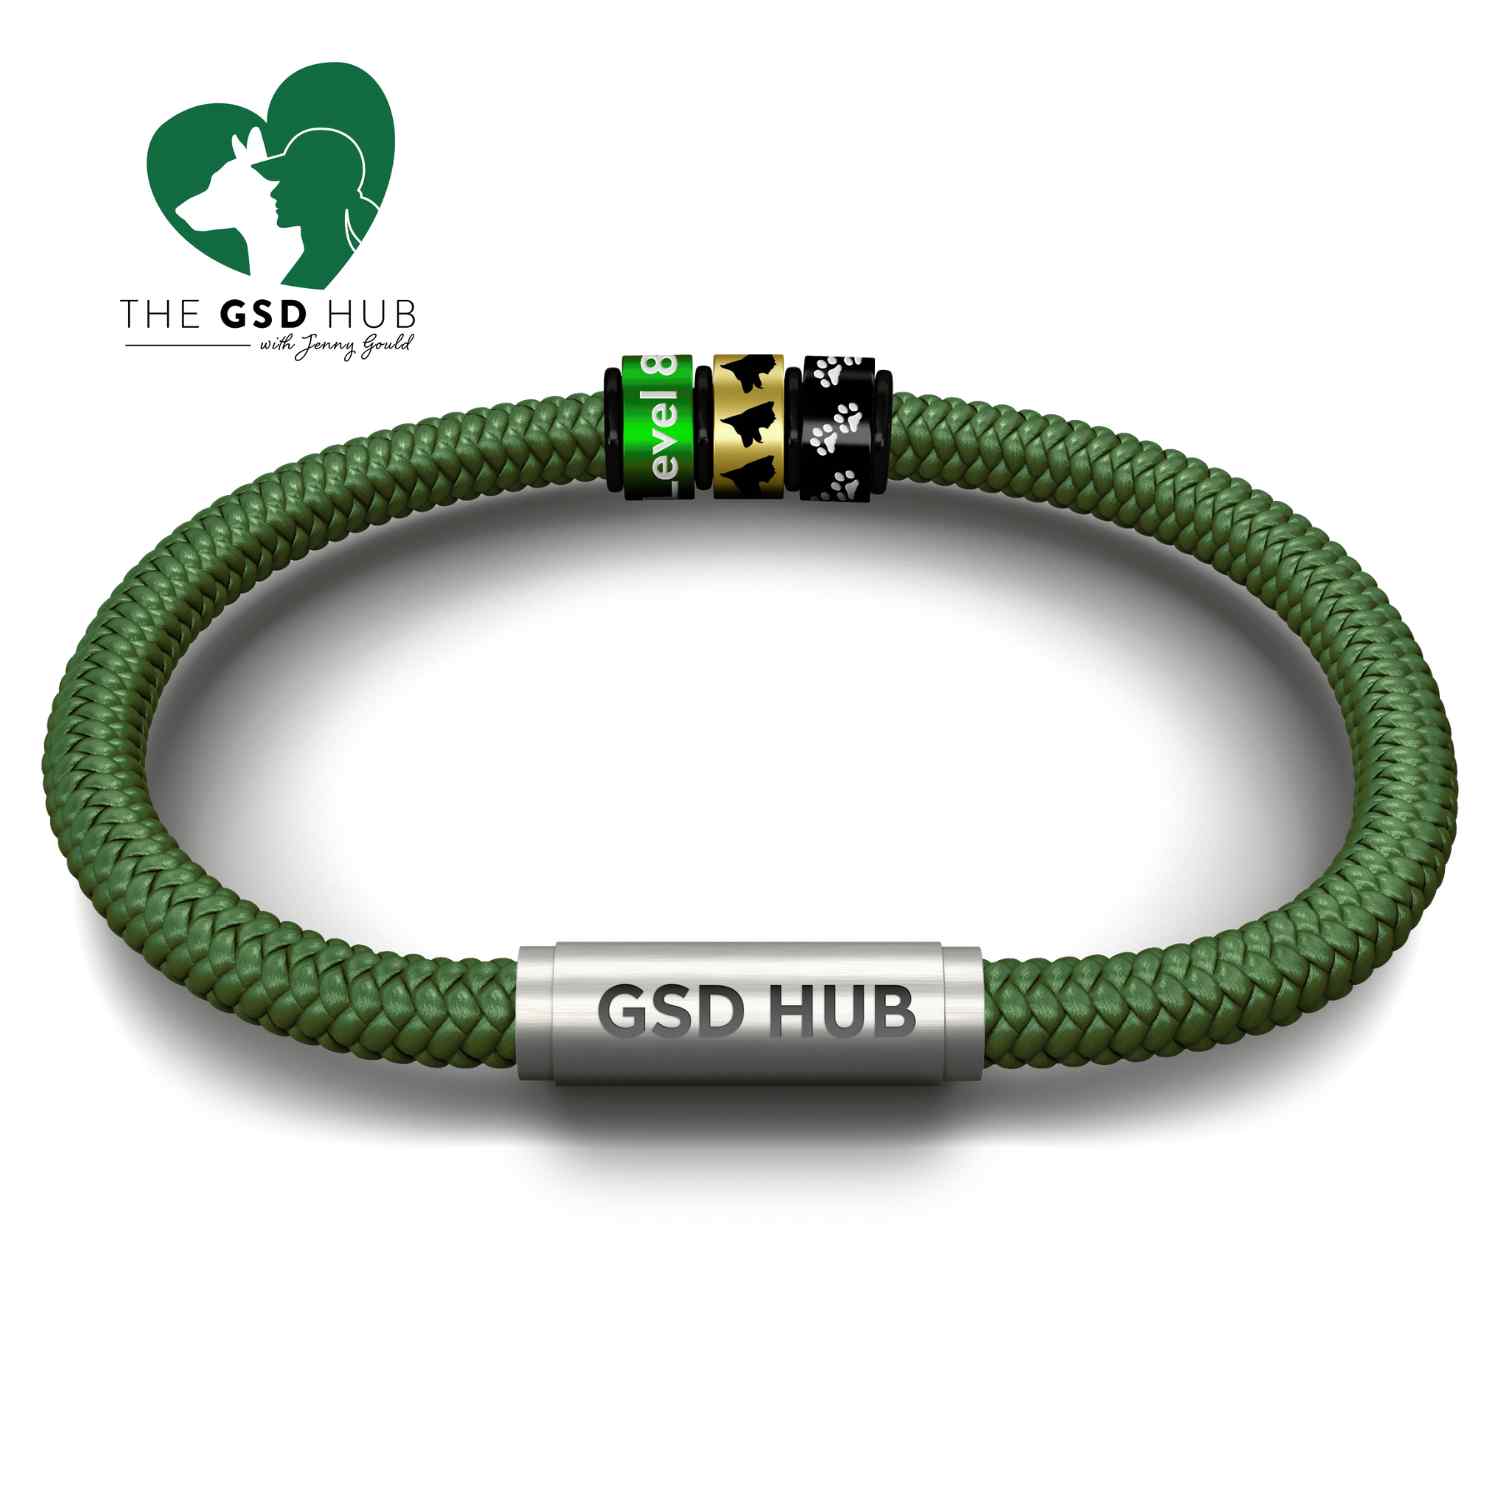 GSD Hub NOTCH Bracelet - Green with GSD Hub Clasp